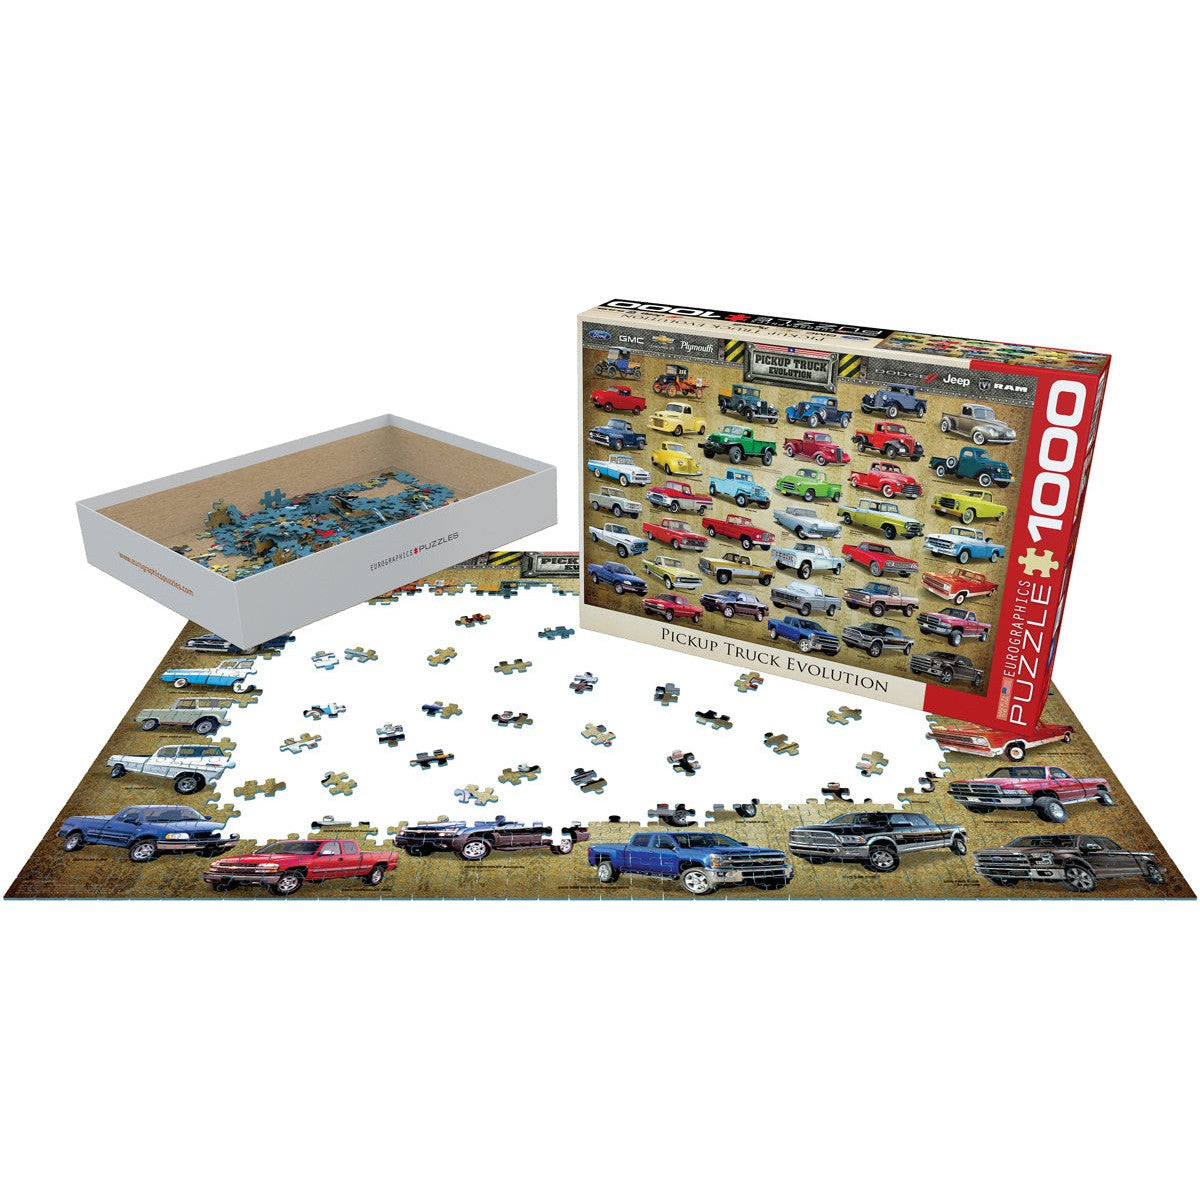 Pickup Truck Evolution 1000 Piece Jigsaw Puzzle Eurographics